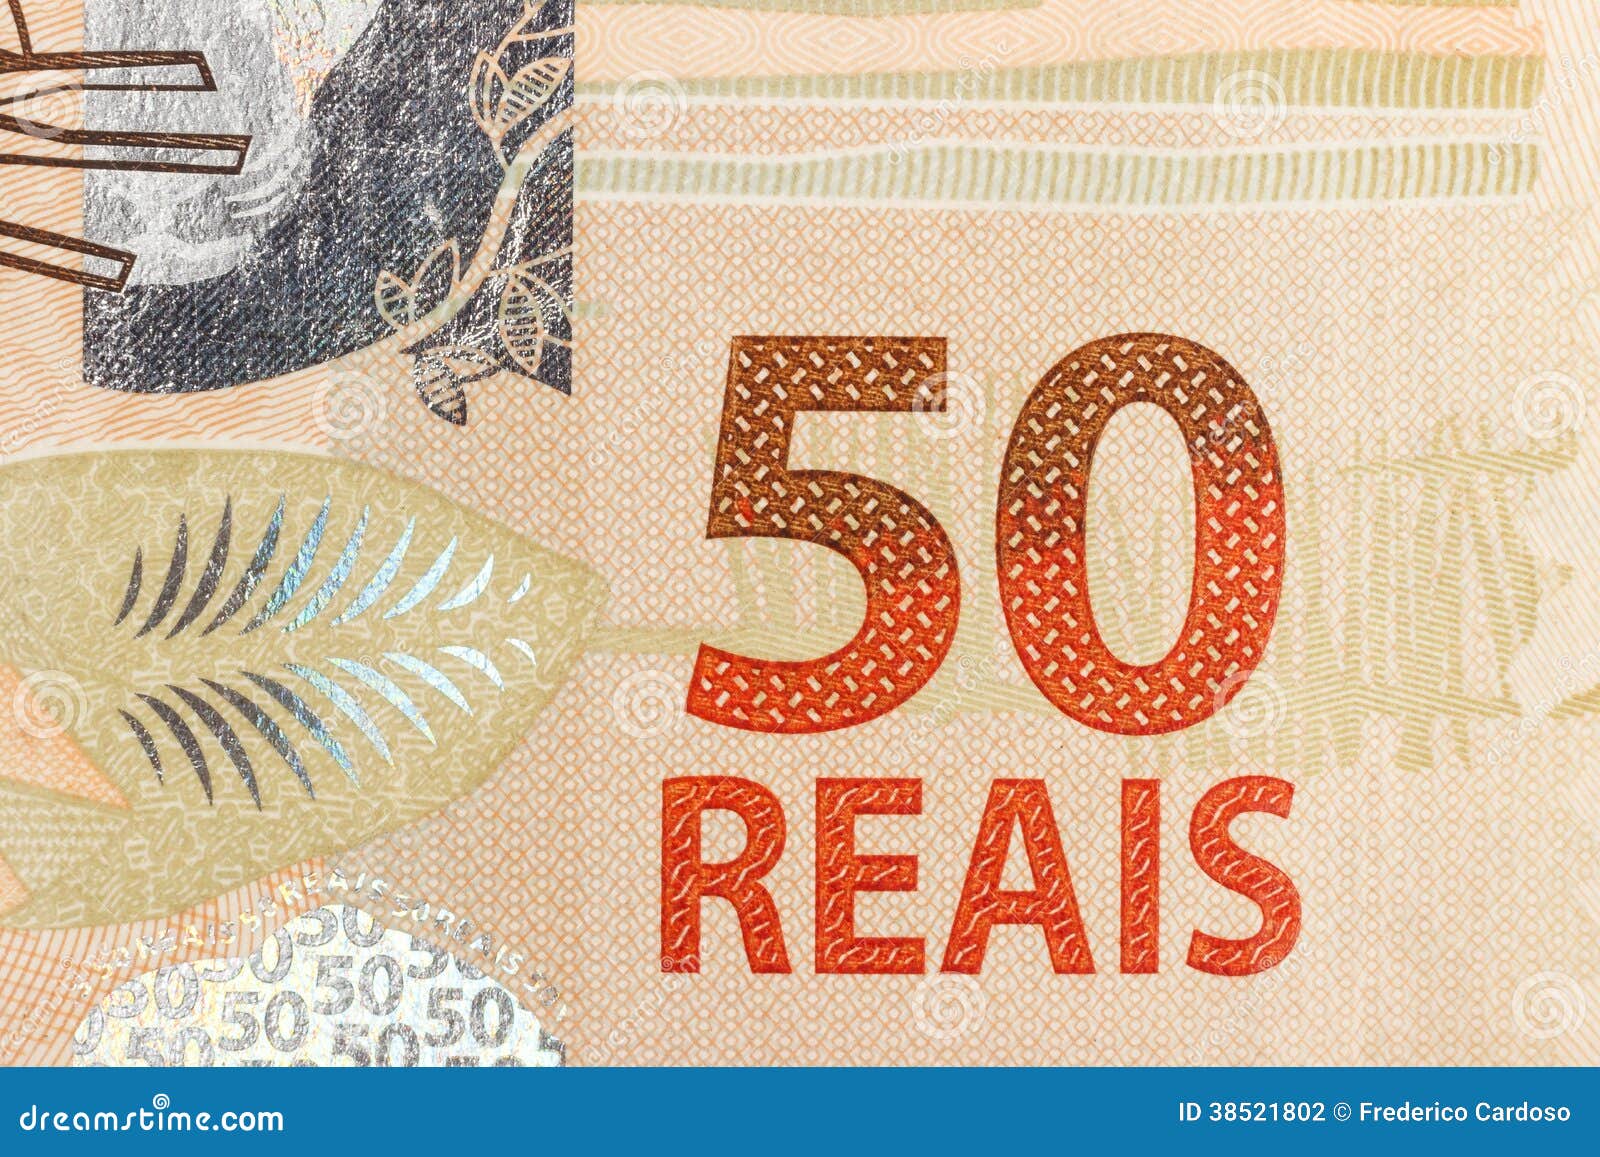 50 reais bill